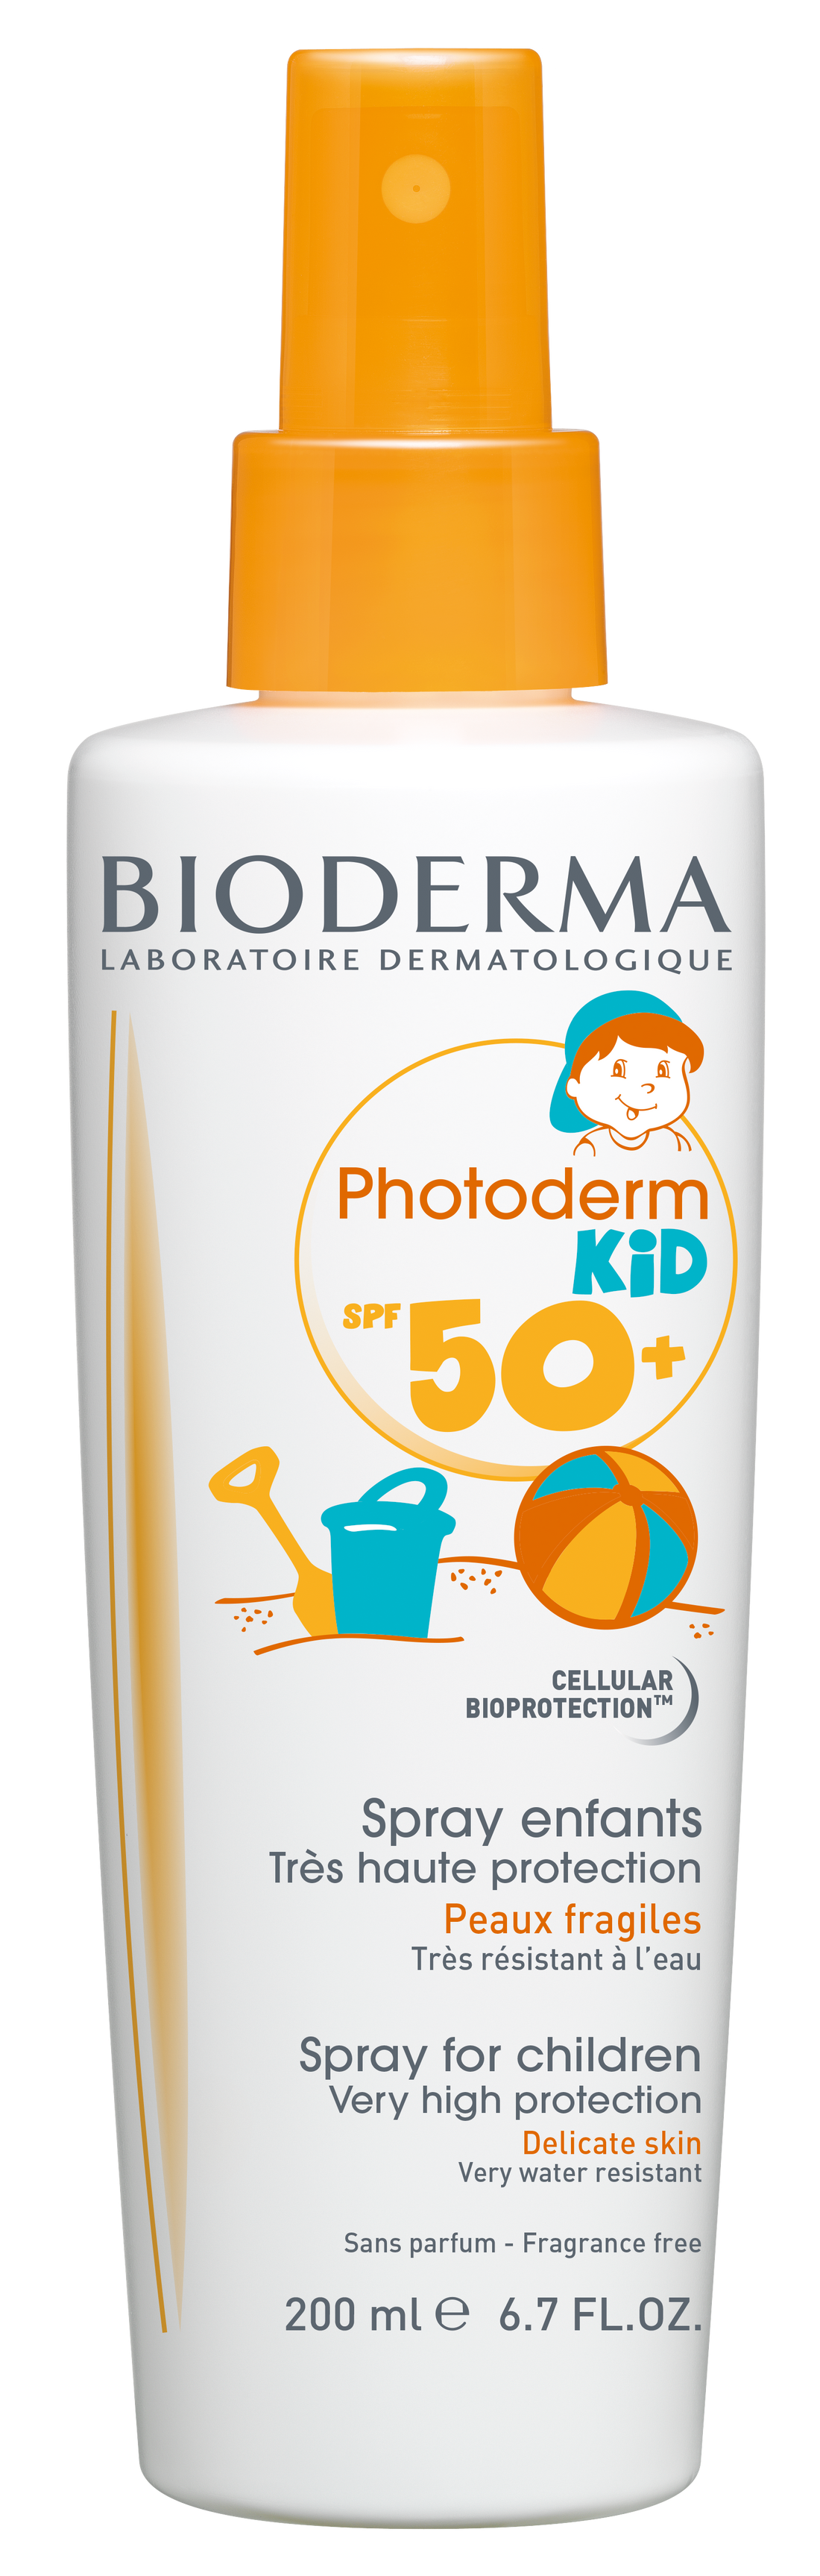 Bioderma Photoderm Kid Spray SPF50+ Sun Protection for Delicate Skin 200ml